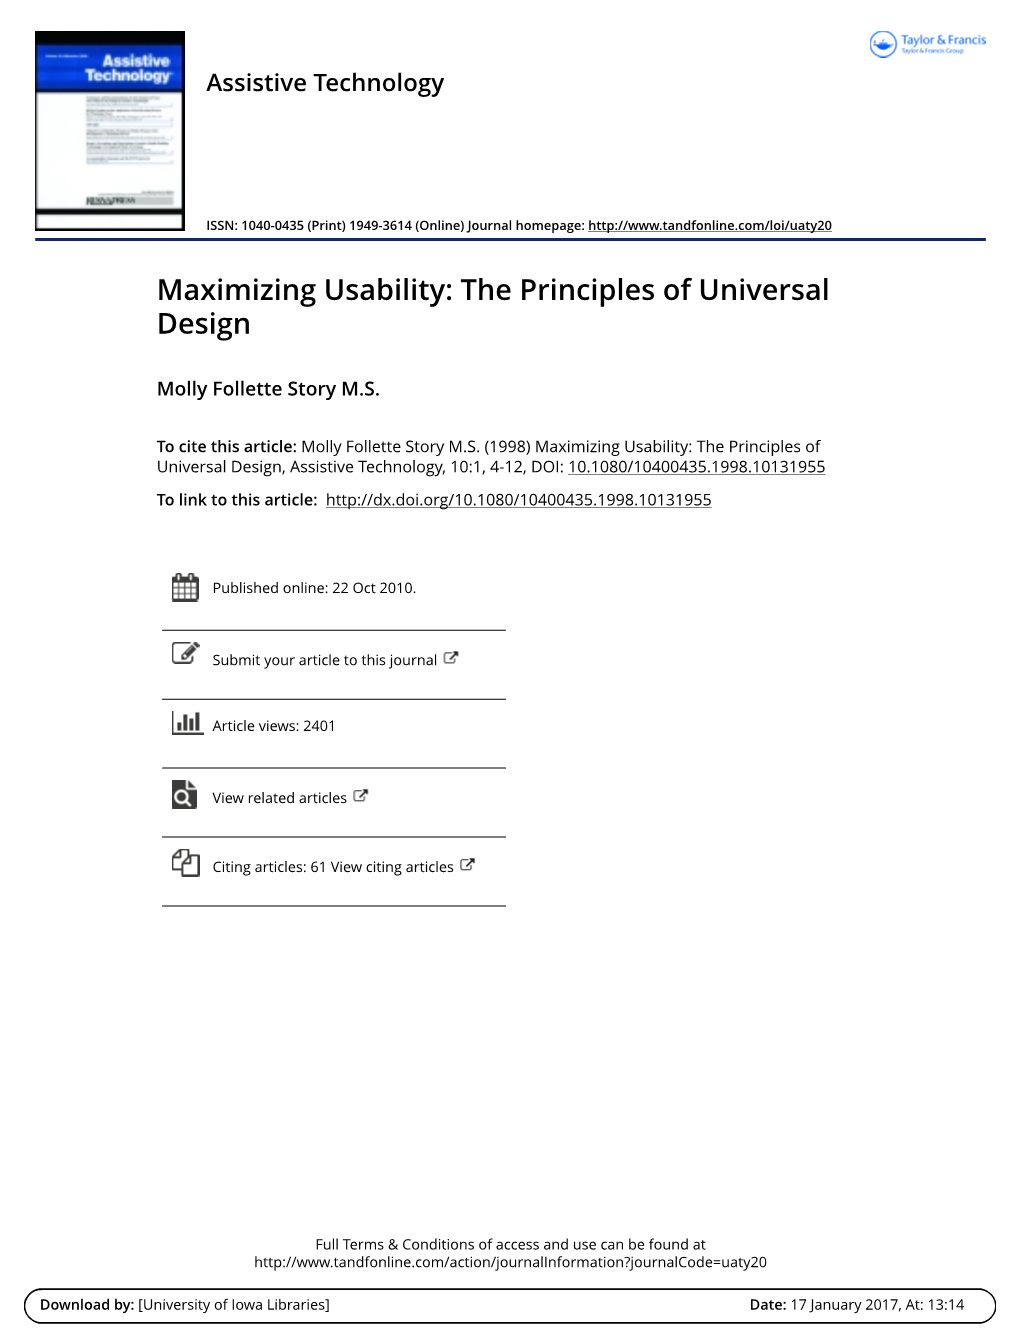 Maximizing Usability the Principles of Universal Design.Pdf